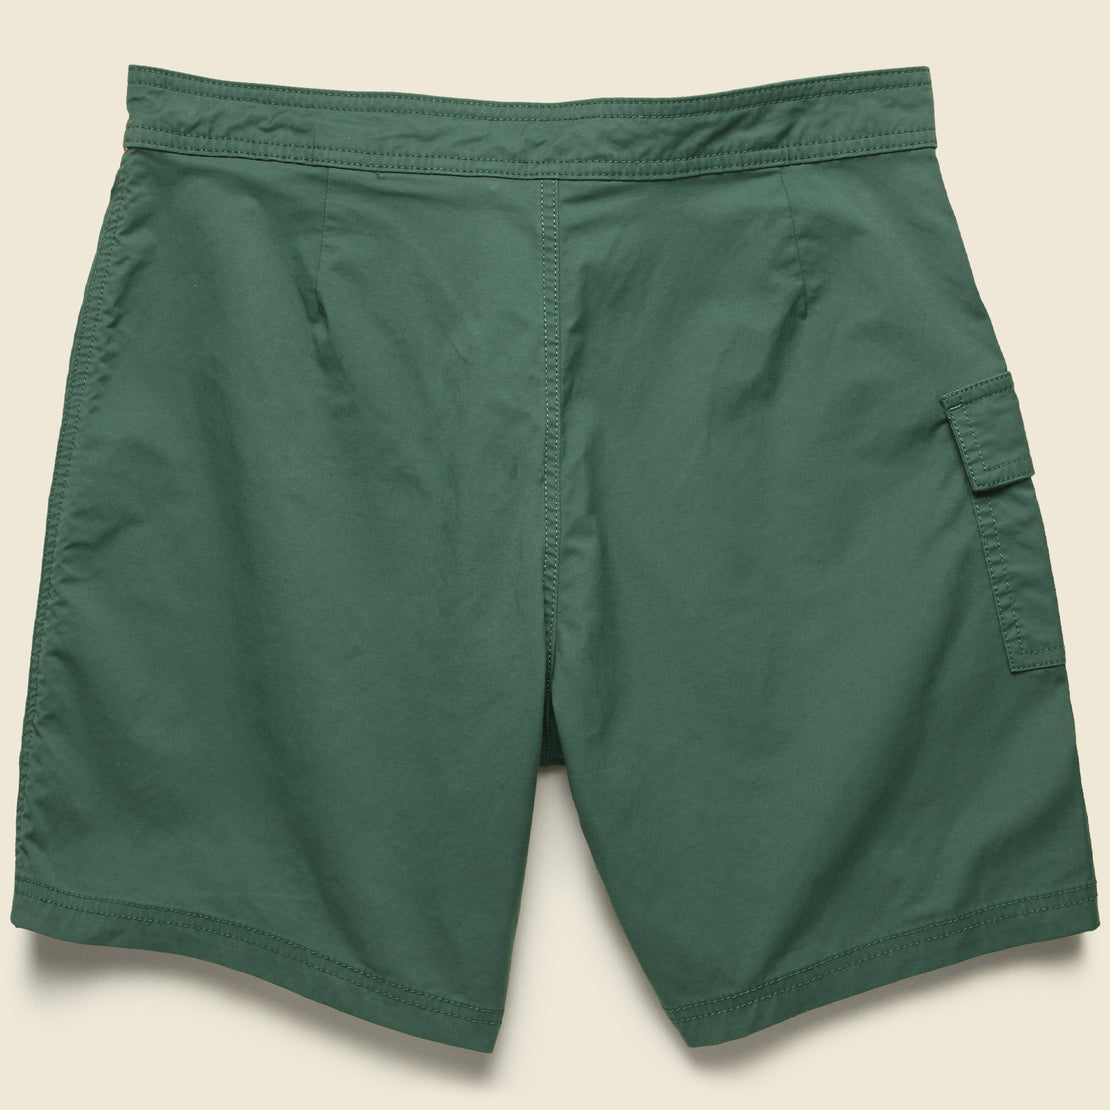 Grant Boardshort - Pine - Katin - STAG Provisions - Shorts - Swim